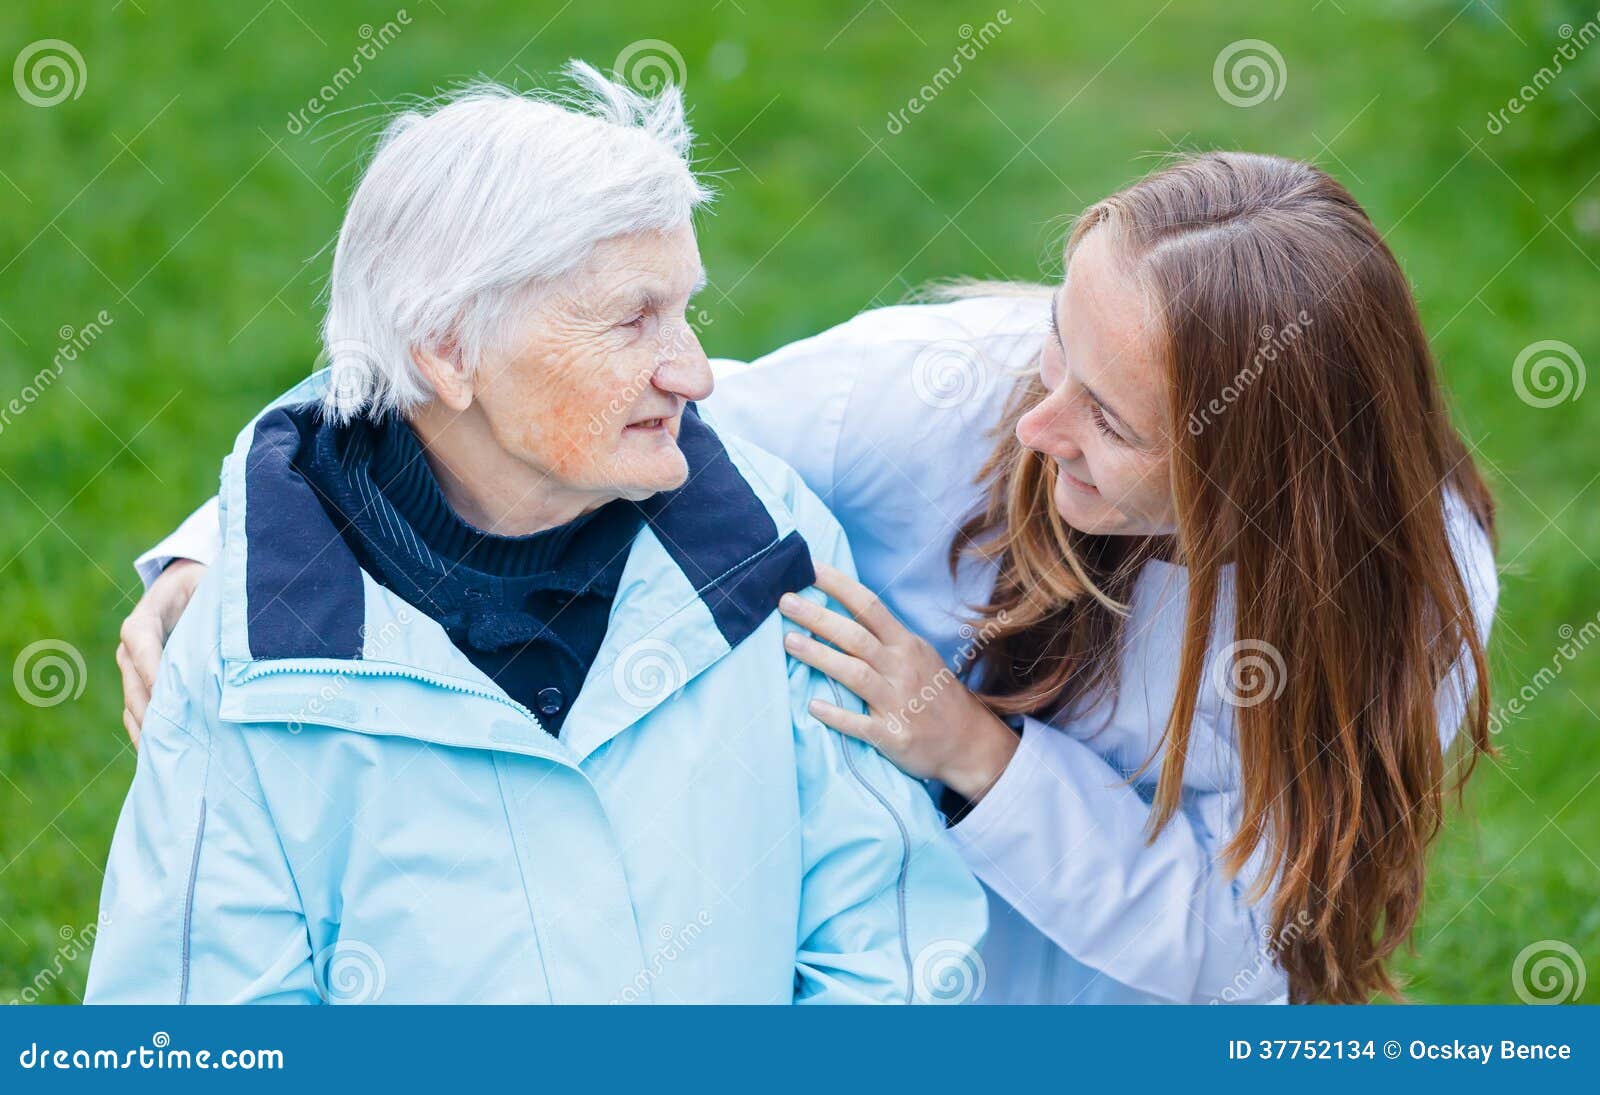 Elderly care. Portrait of elderly women and her caregiver